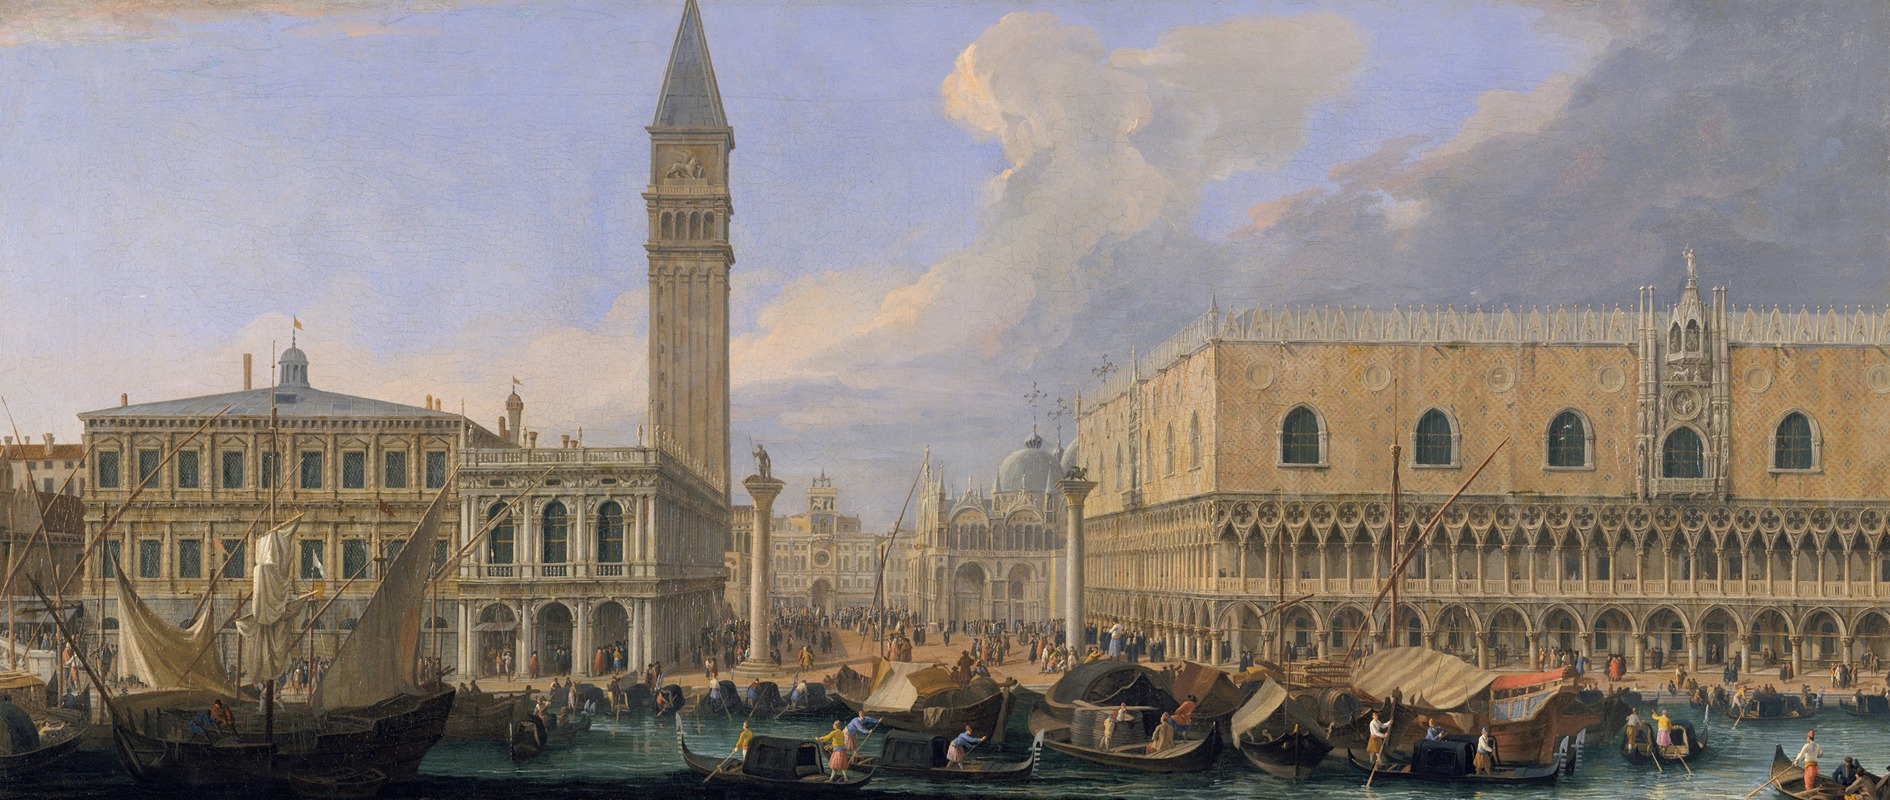 Luca Carlevarijs - The Molo, Venice, from the Bacino di San Marco